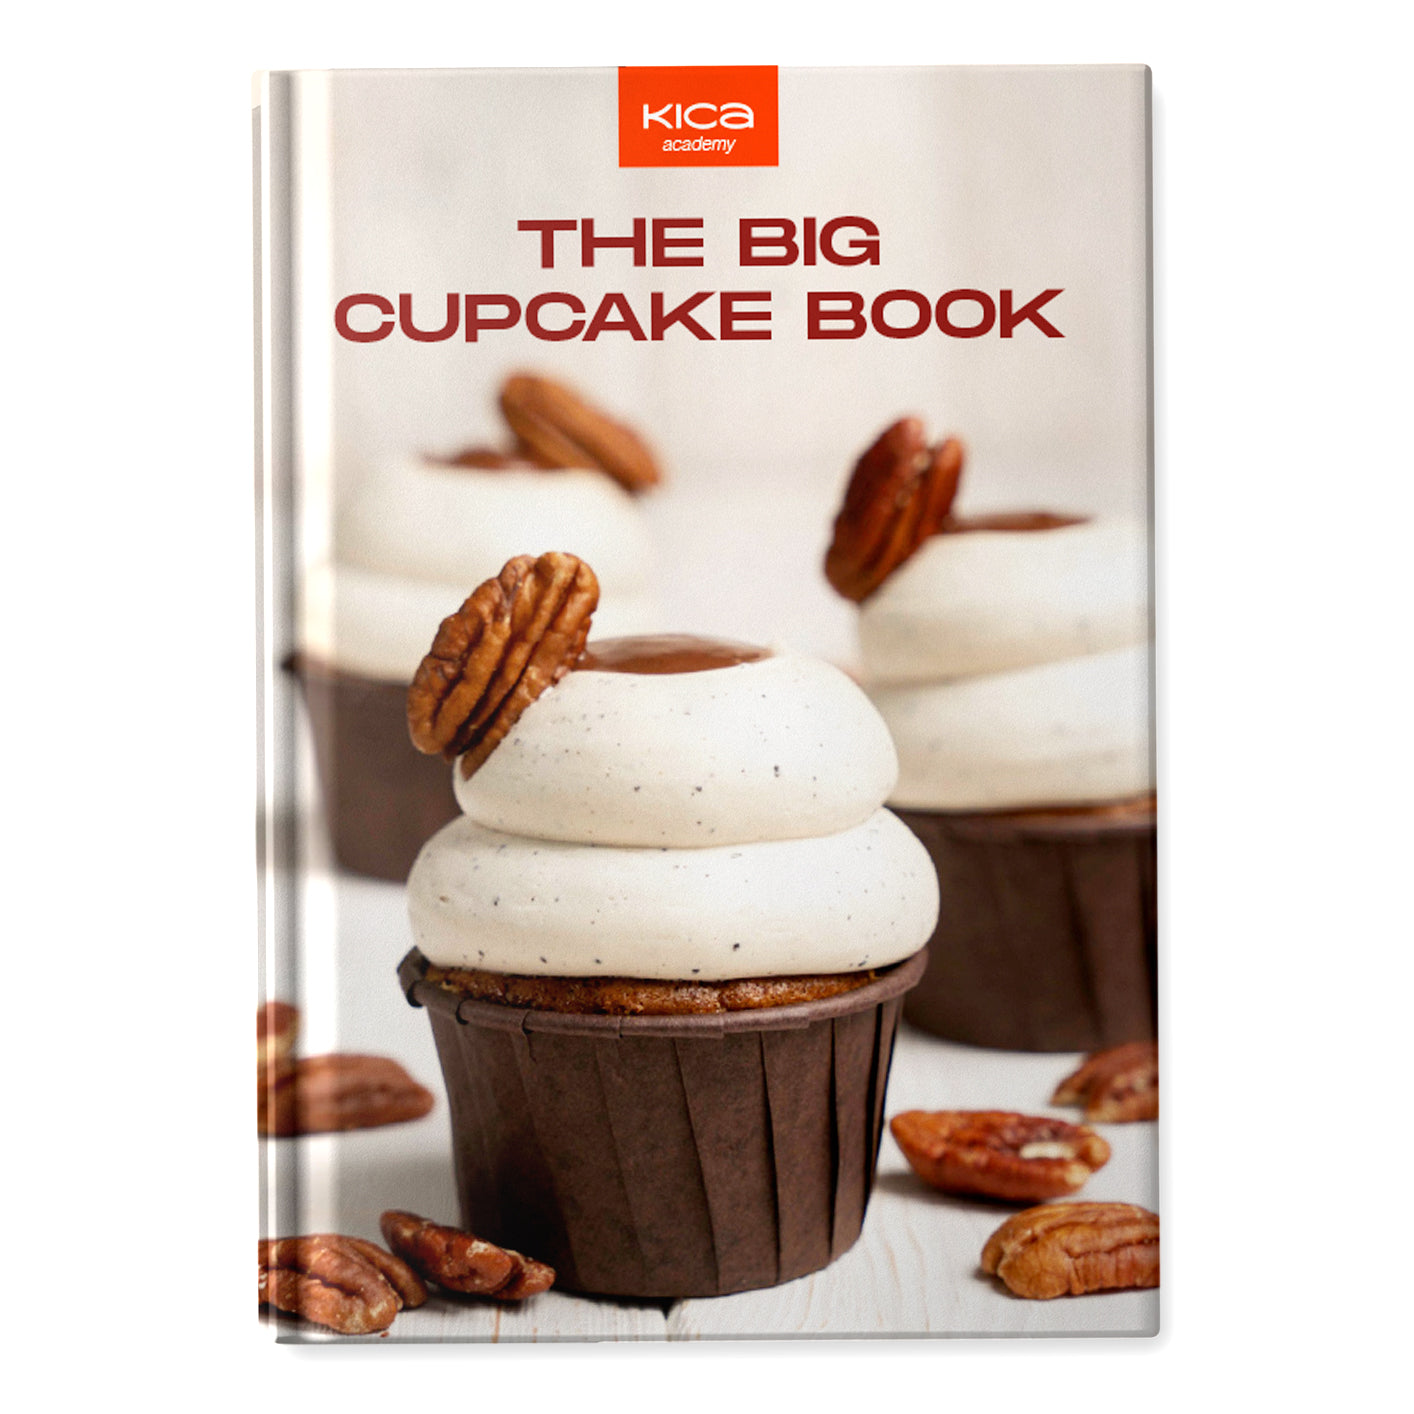 The Big Cupcake Book